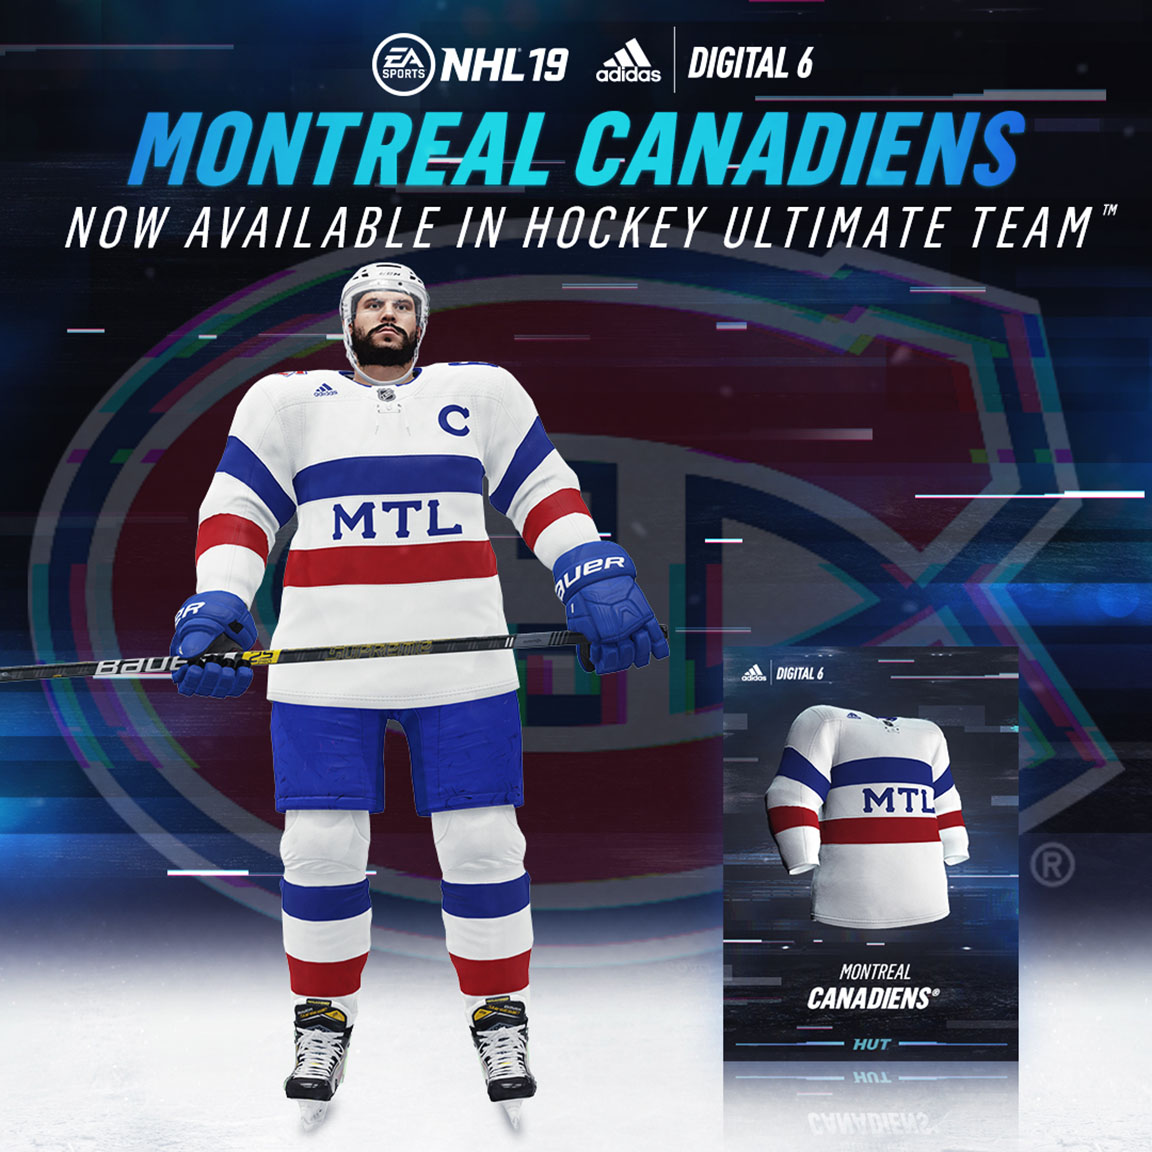 adidasHockey x EA_ Digital6_Canadiens_01.jpg